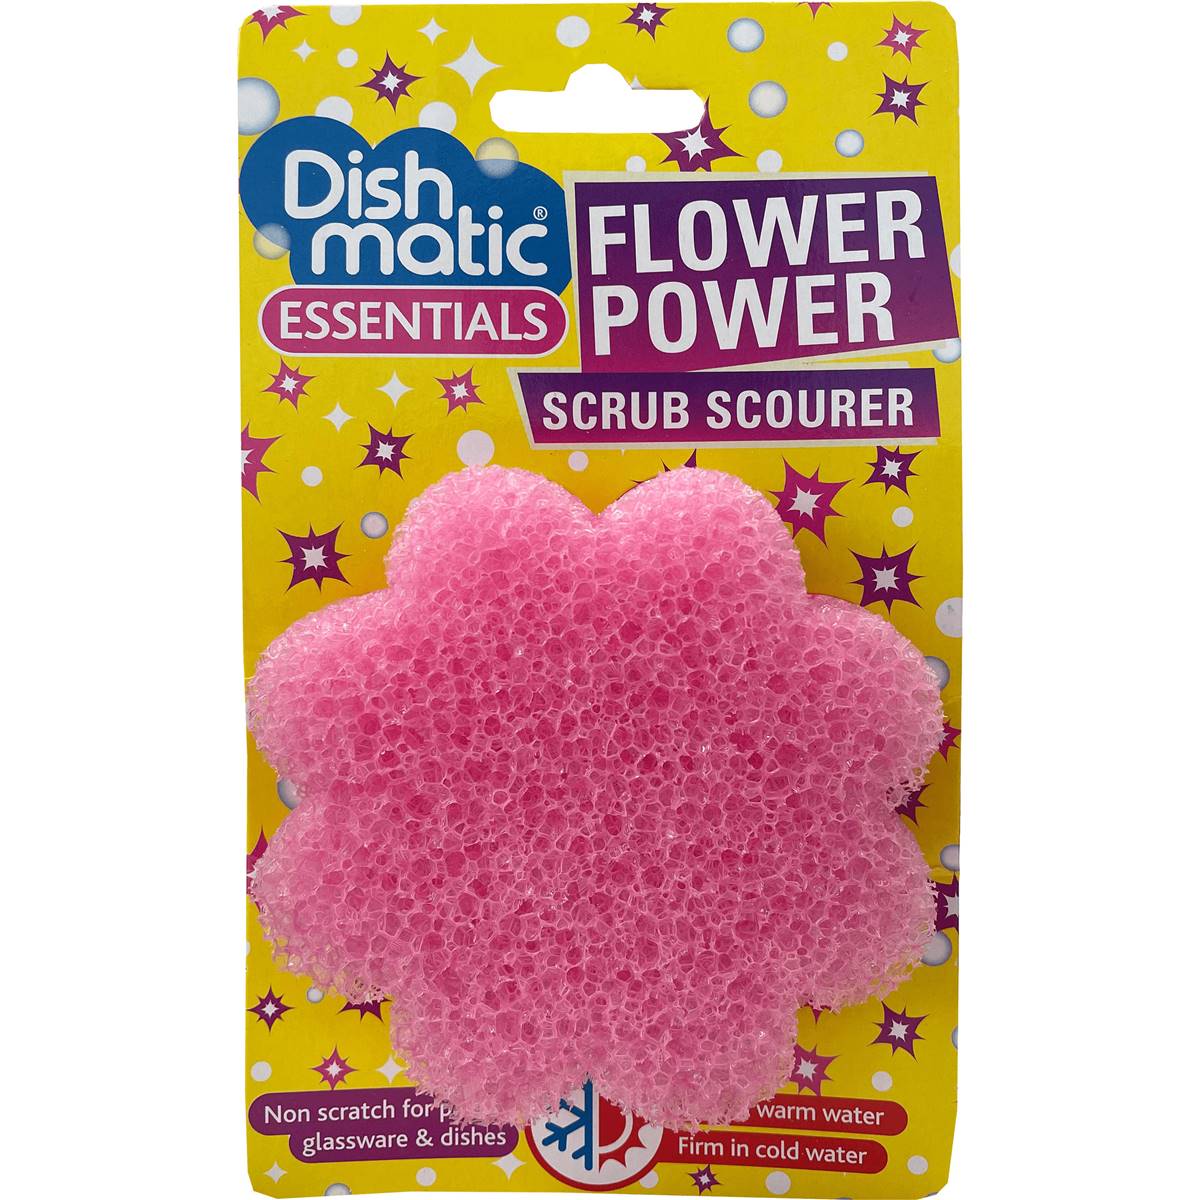 Dishmatic Scrub Scourer Flower Power